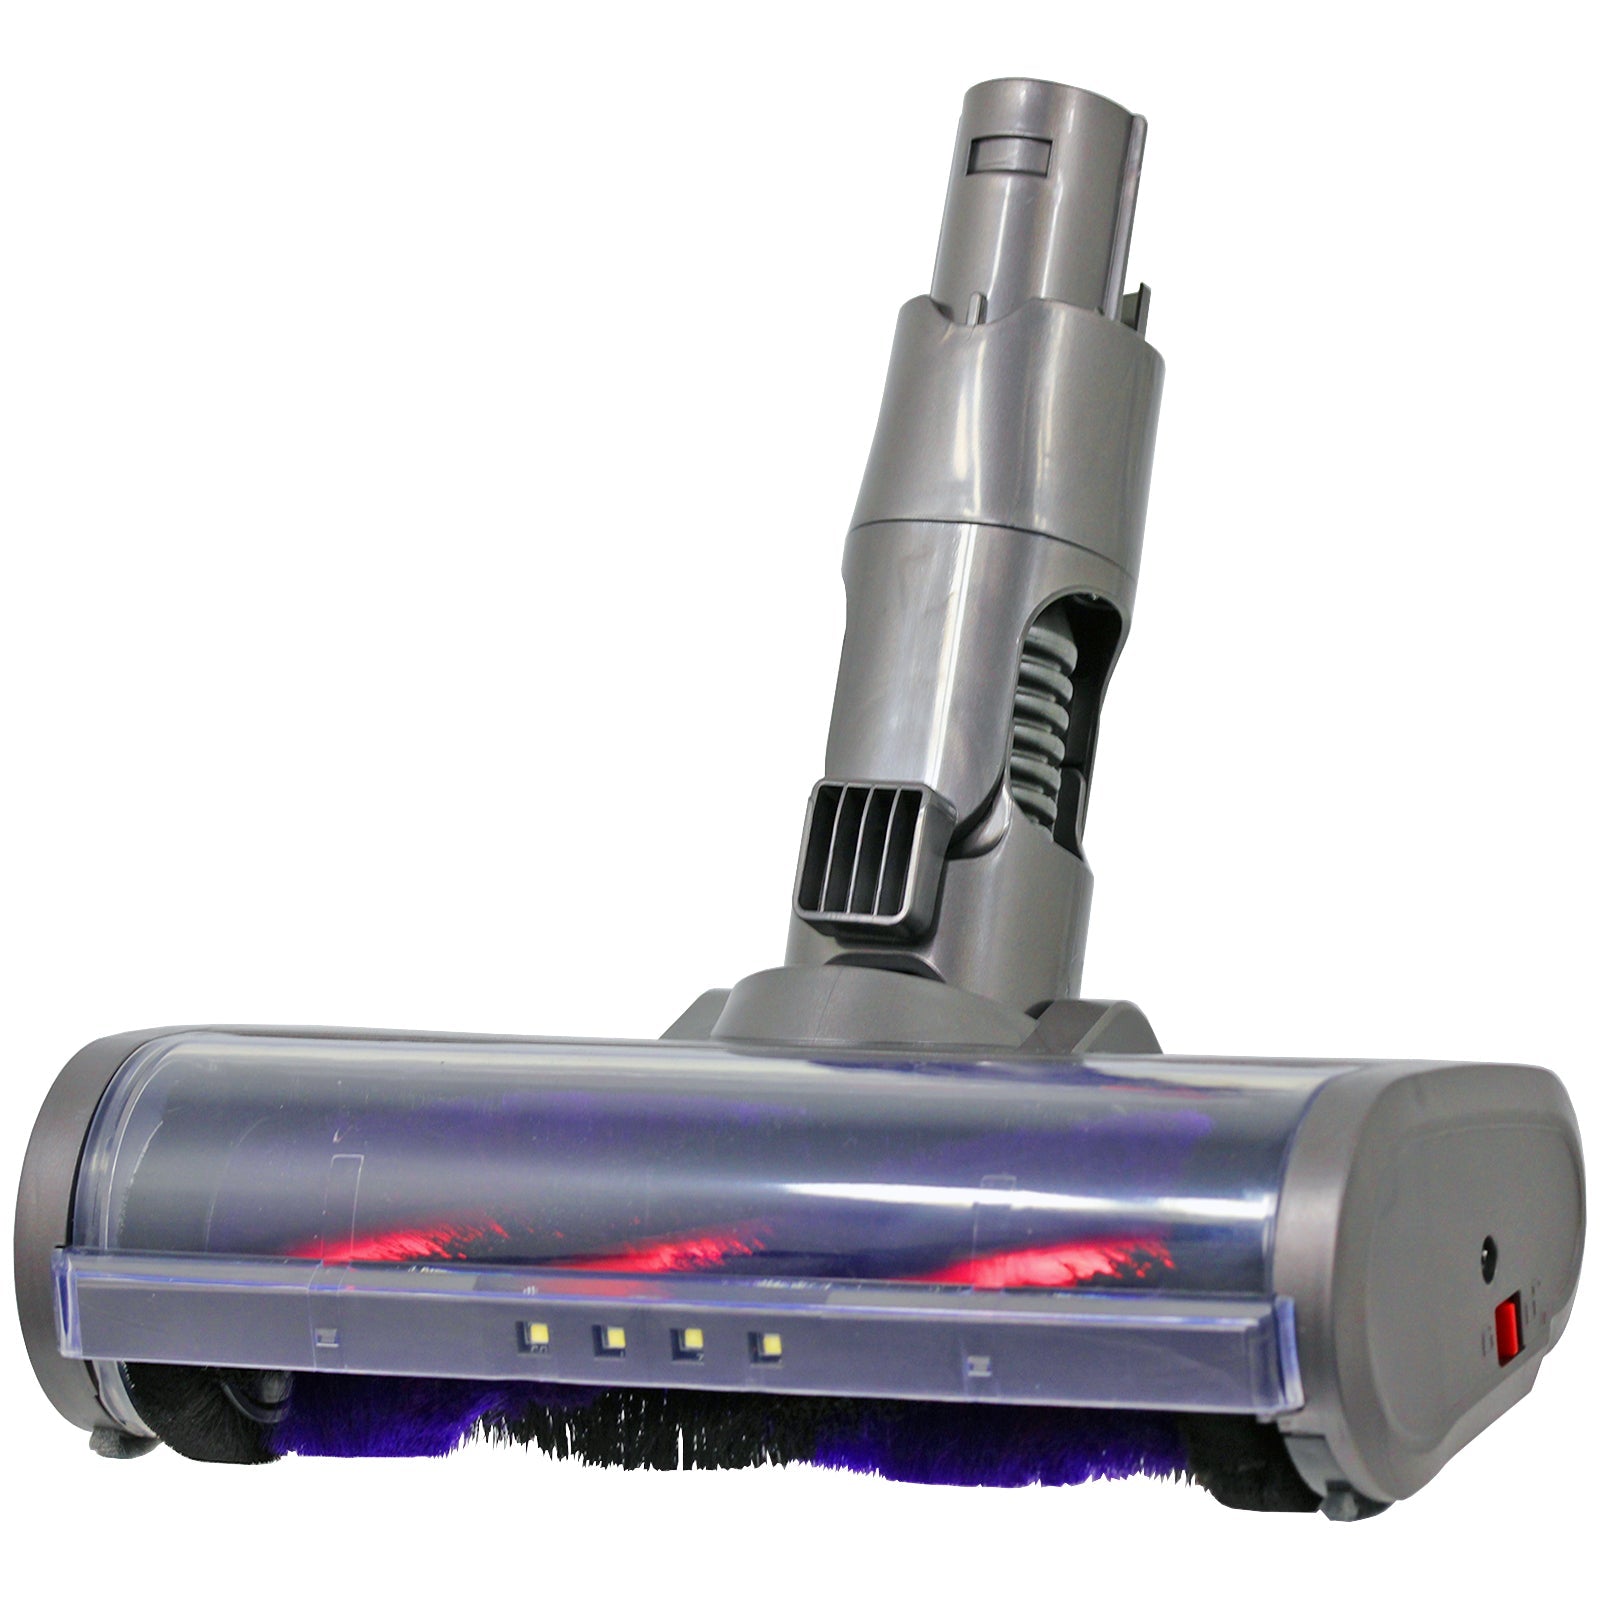 Carbon Fibre Motorhead Floor Tool for DYSON DC59 Animal Vacuum Cleaner